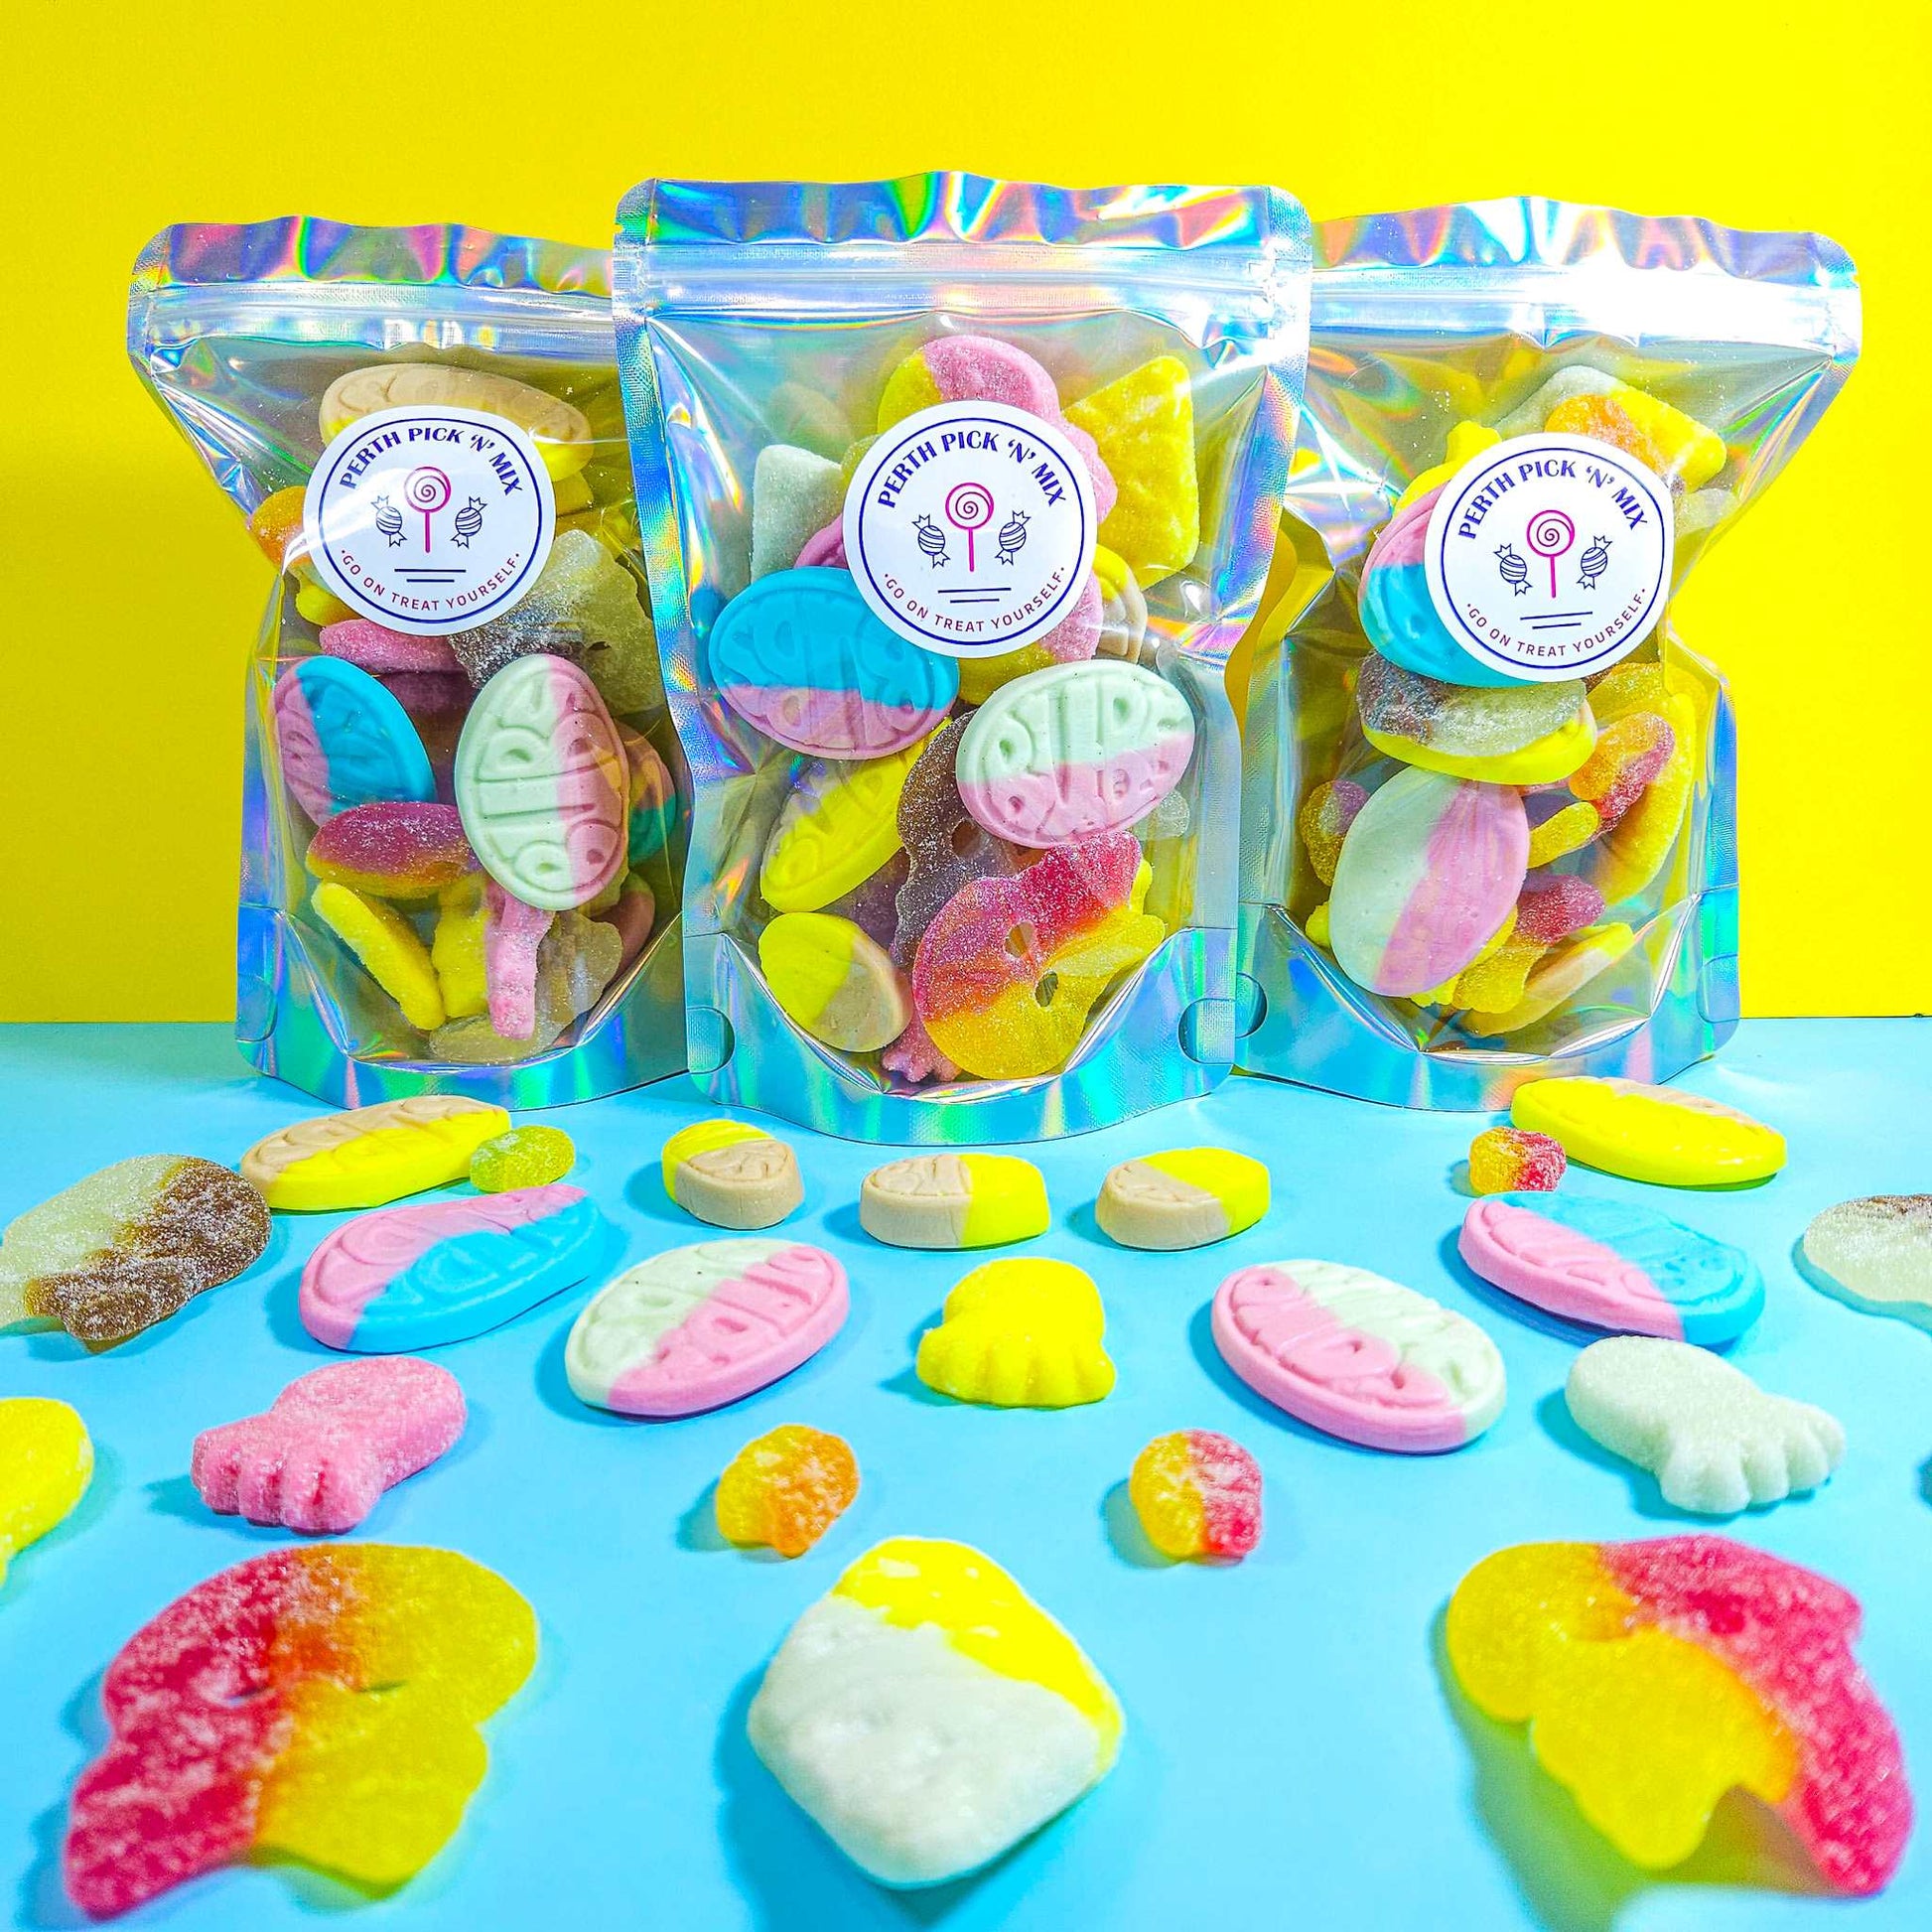 Lolly Kingdom - Australian Online Lolly Shop & Candy Store